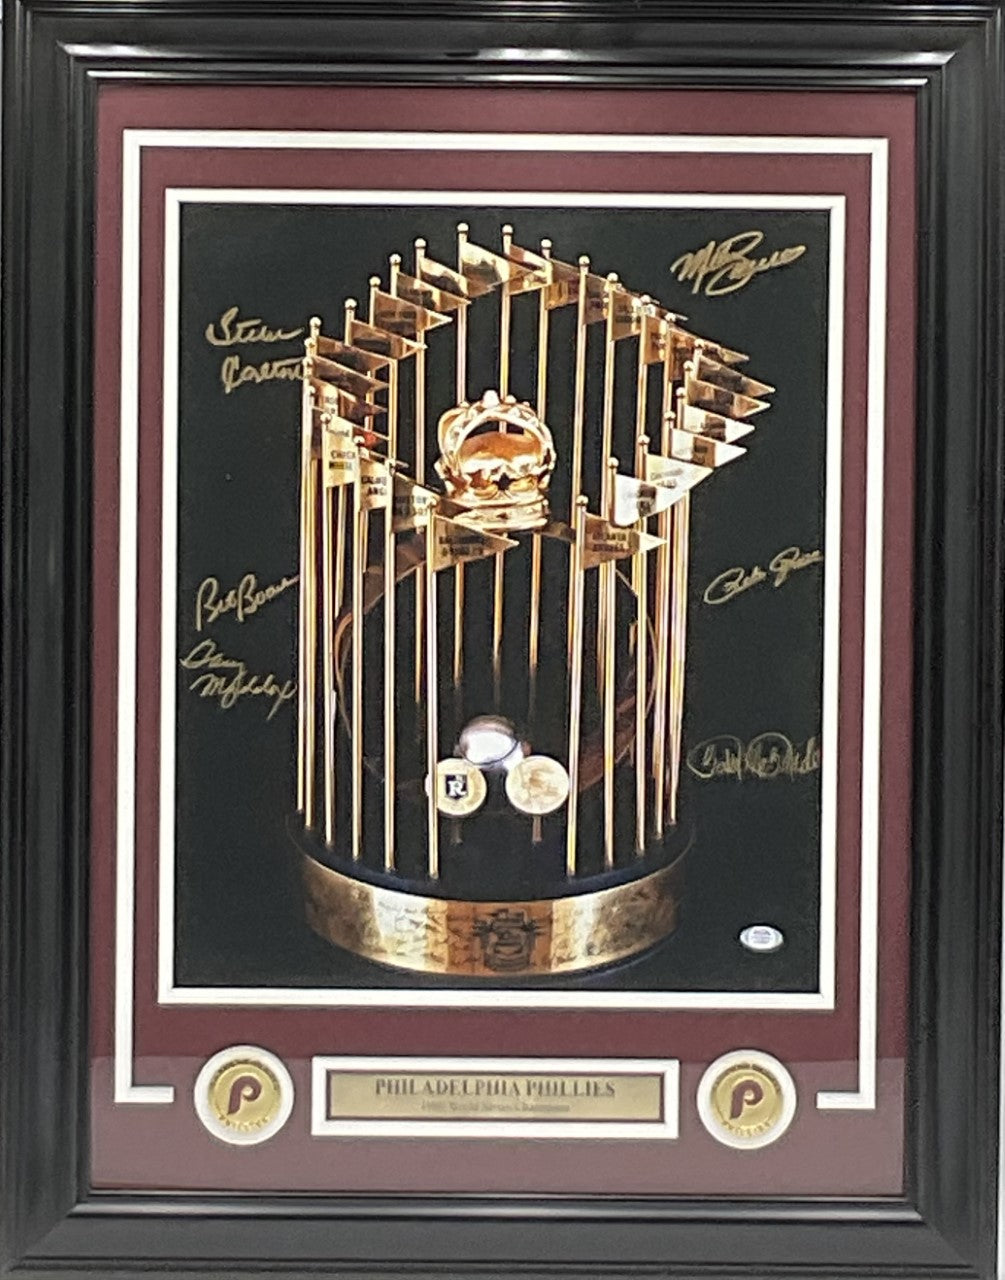 Philadelphia Phillies Autographed 1980 World Series Trophy 16x20 Photo Framed